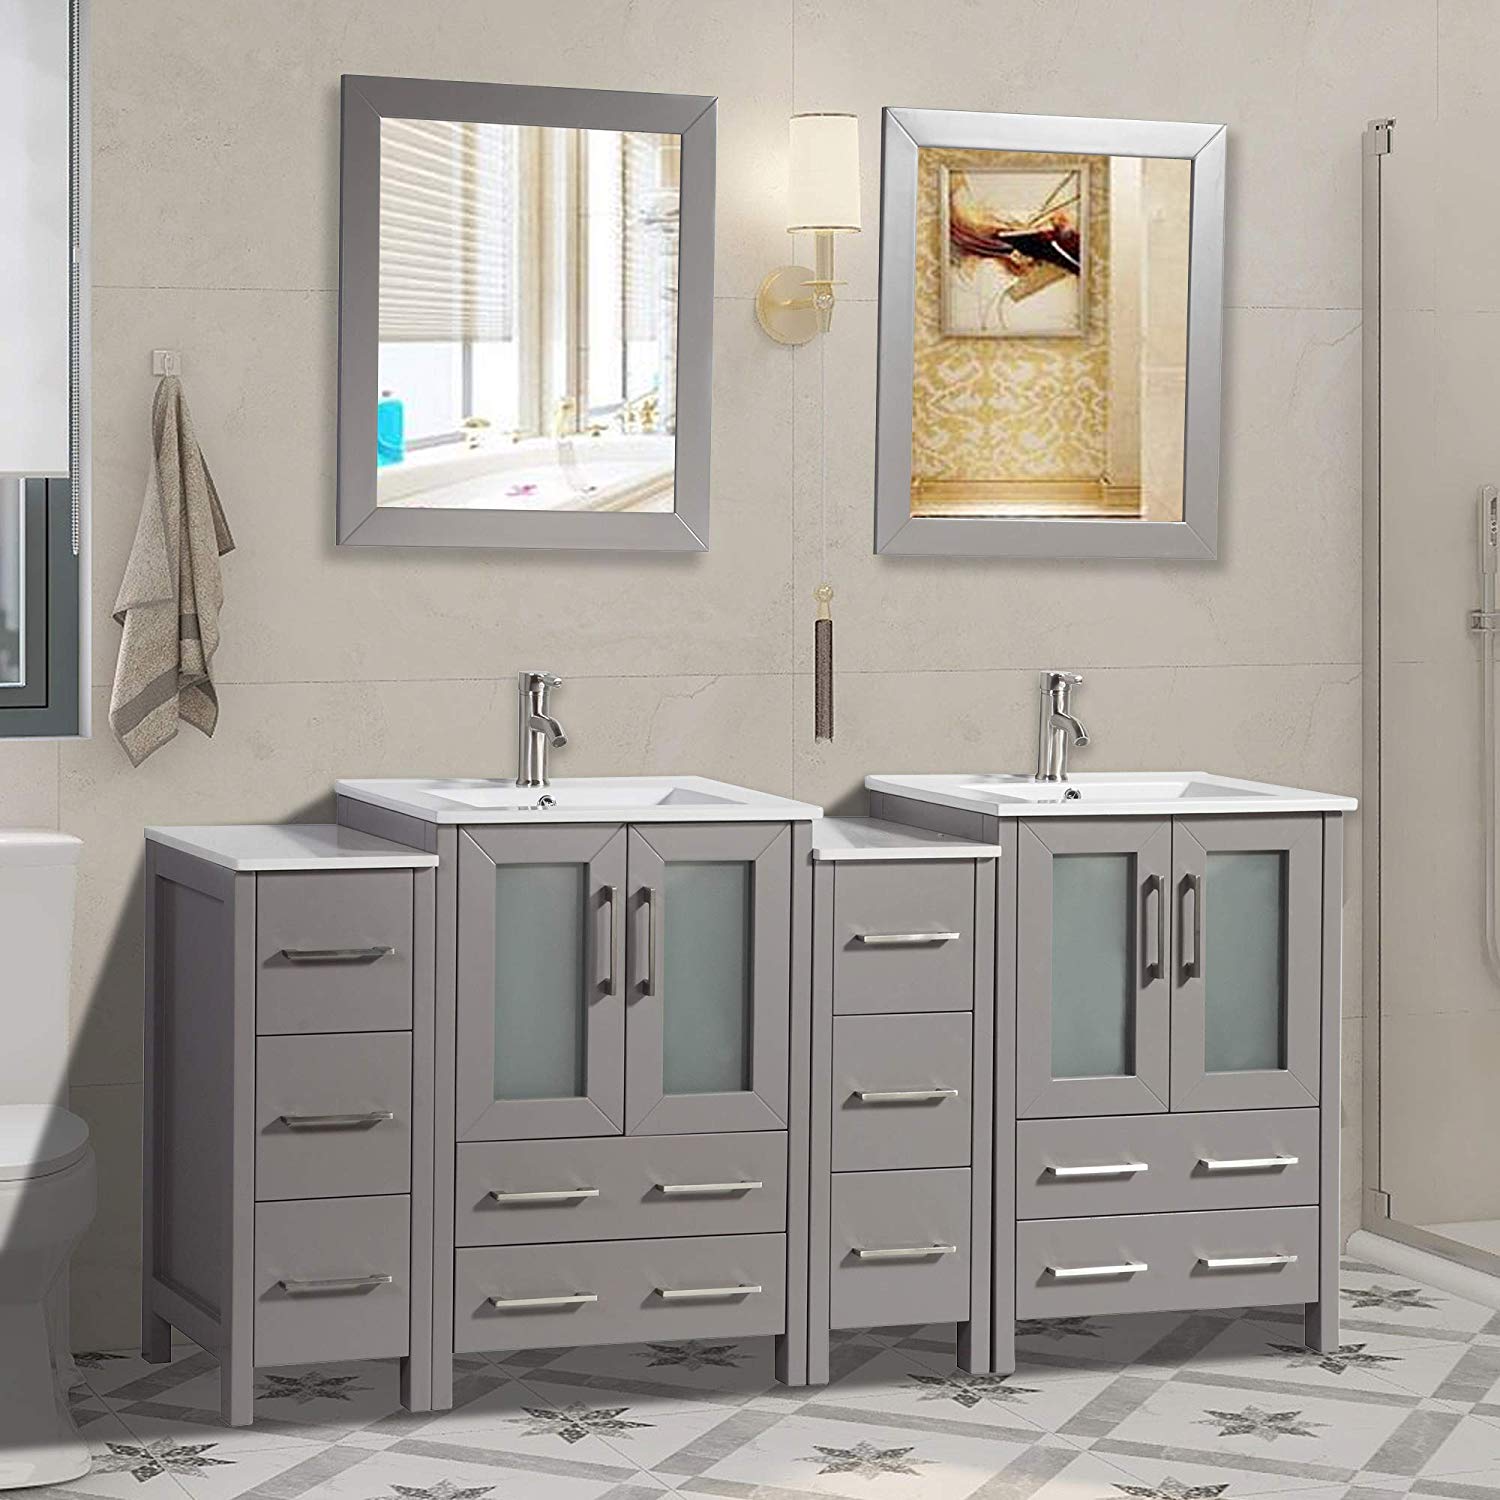 Bathroom Cabinets and Shelf Design